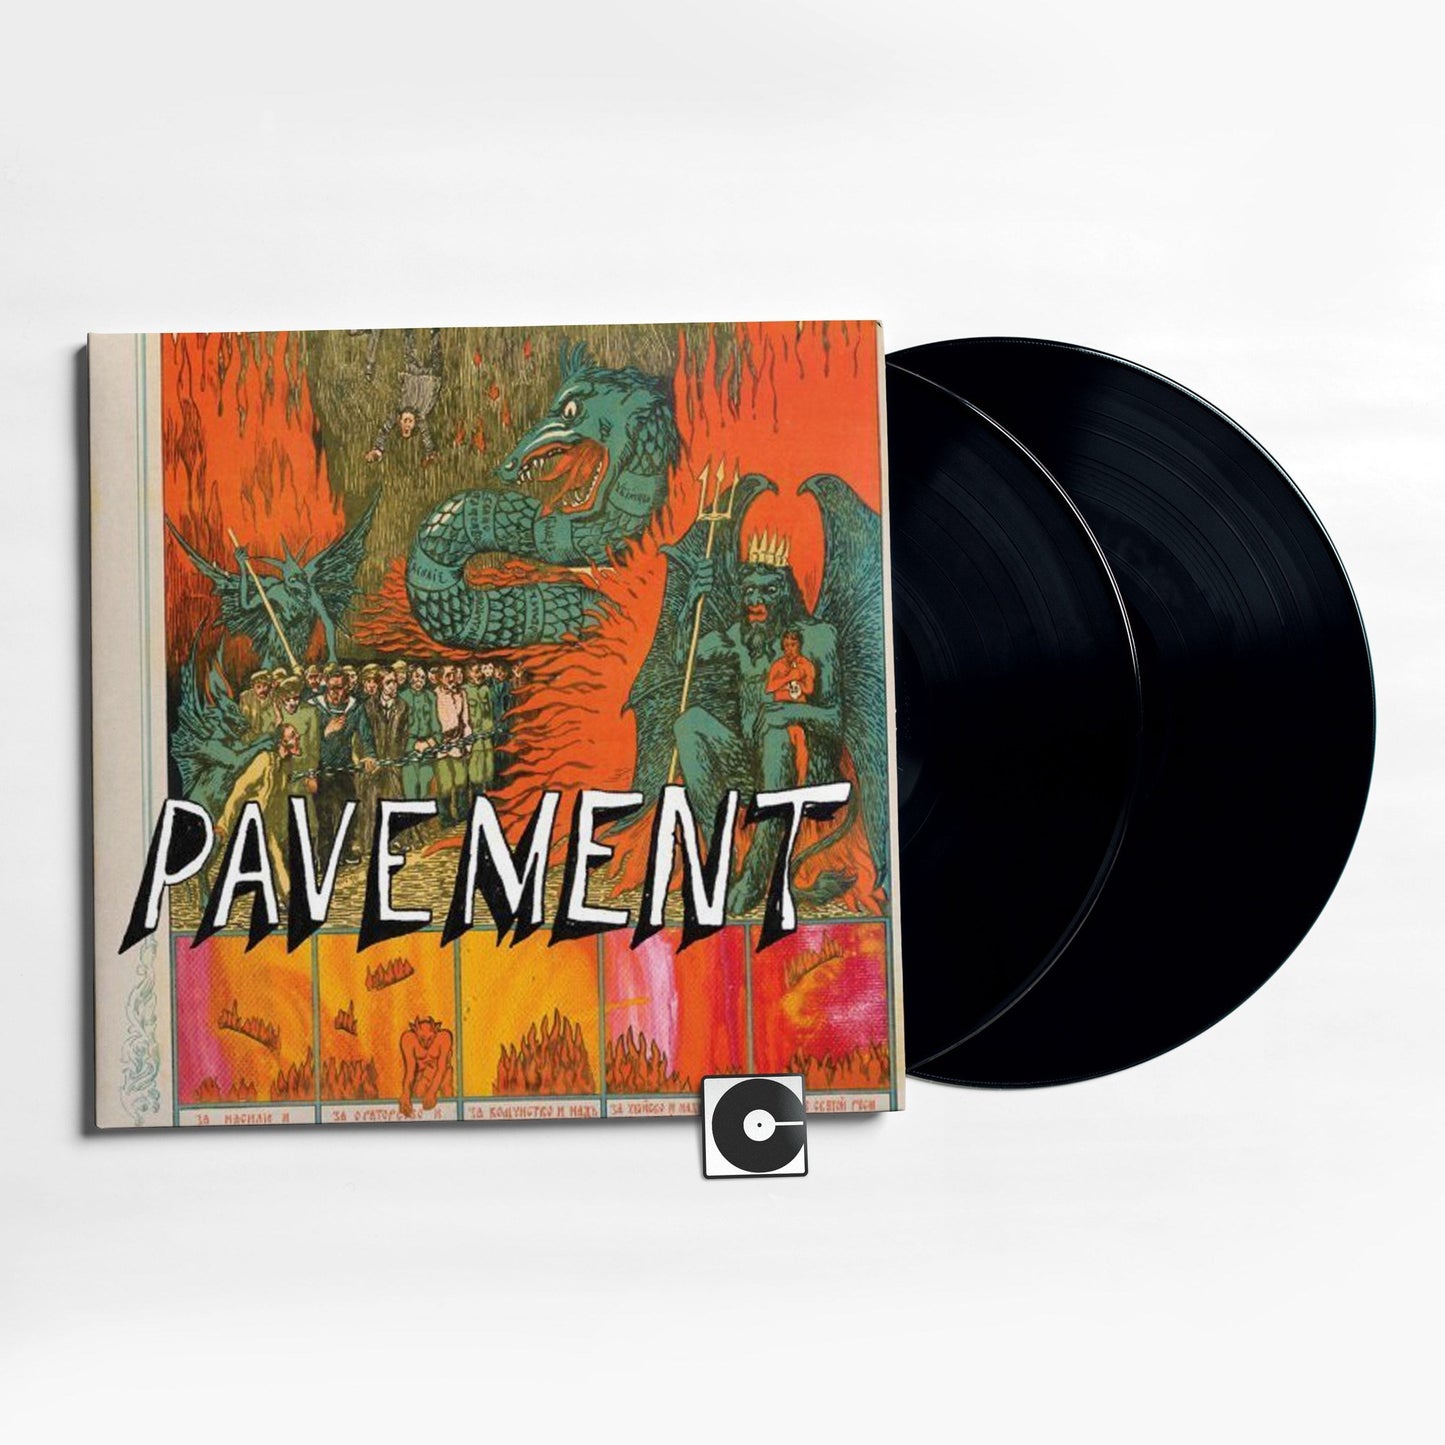 Pavement - "Quarantine The Past"